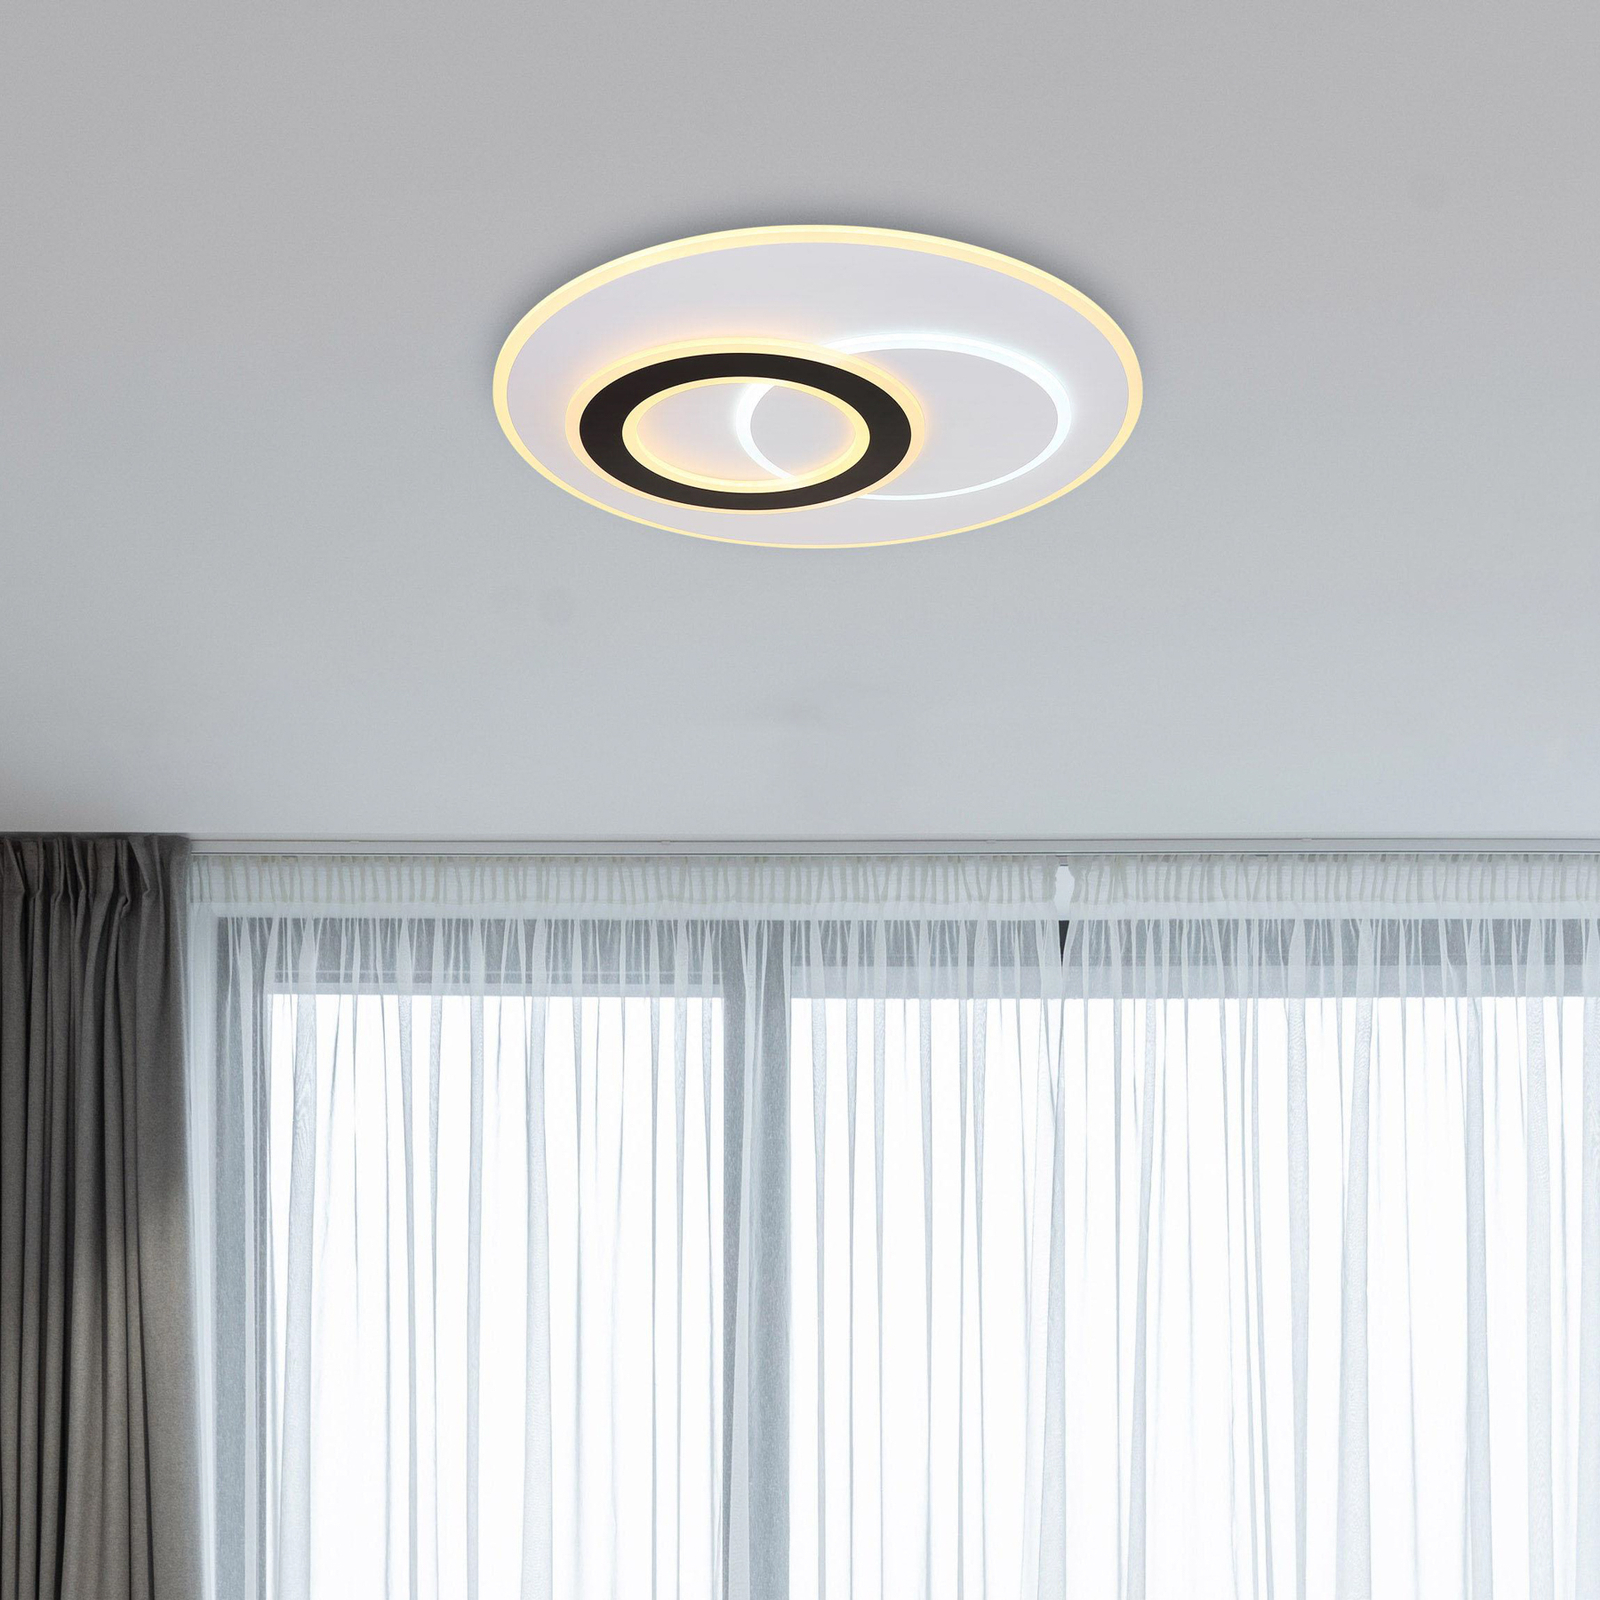 Inteligentné stropné svietidlo LED Jacques, biela/čierna, Ø 70 cm, CCT